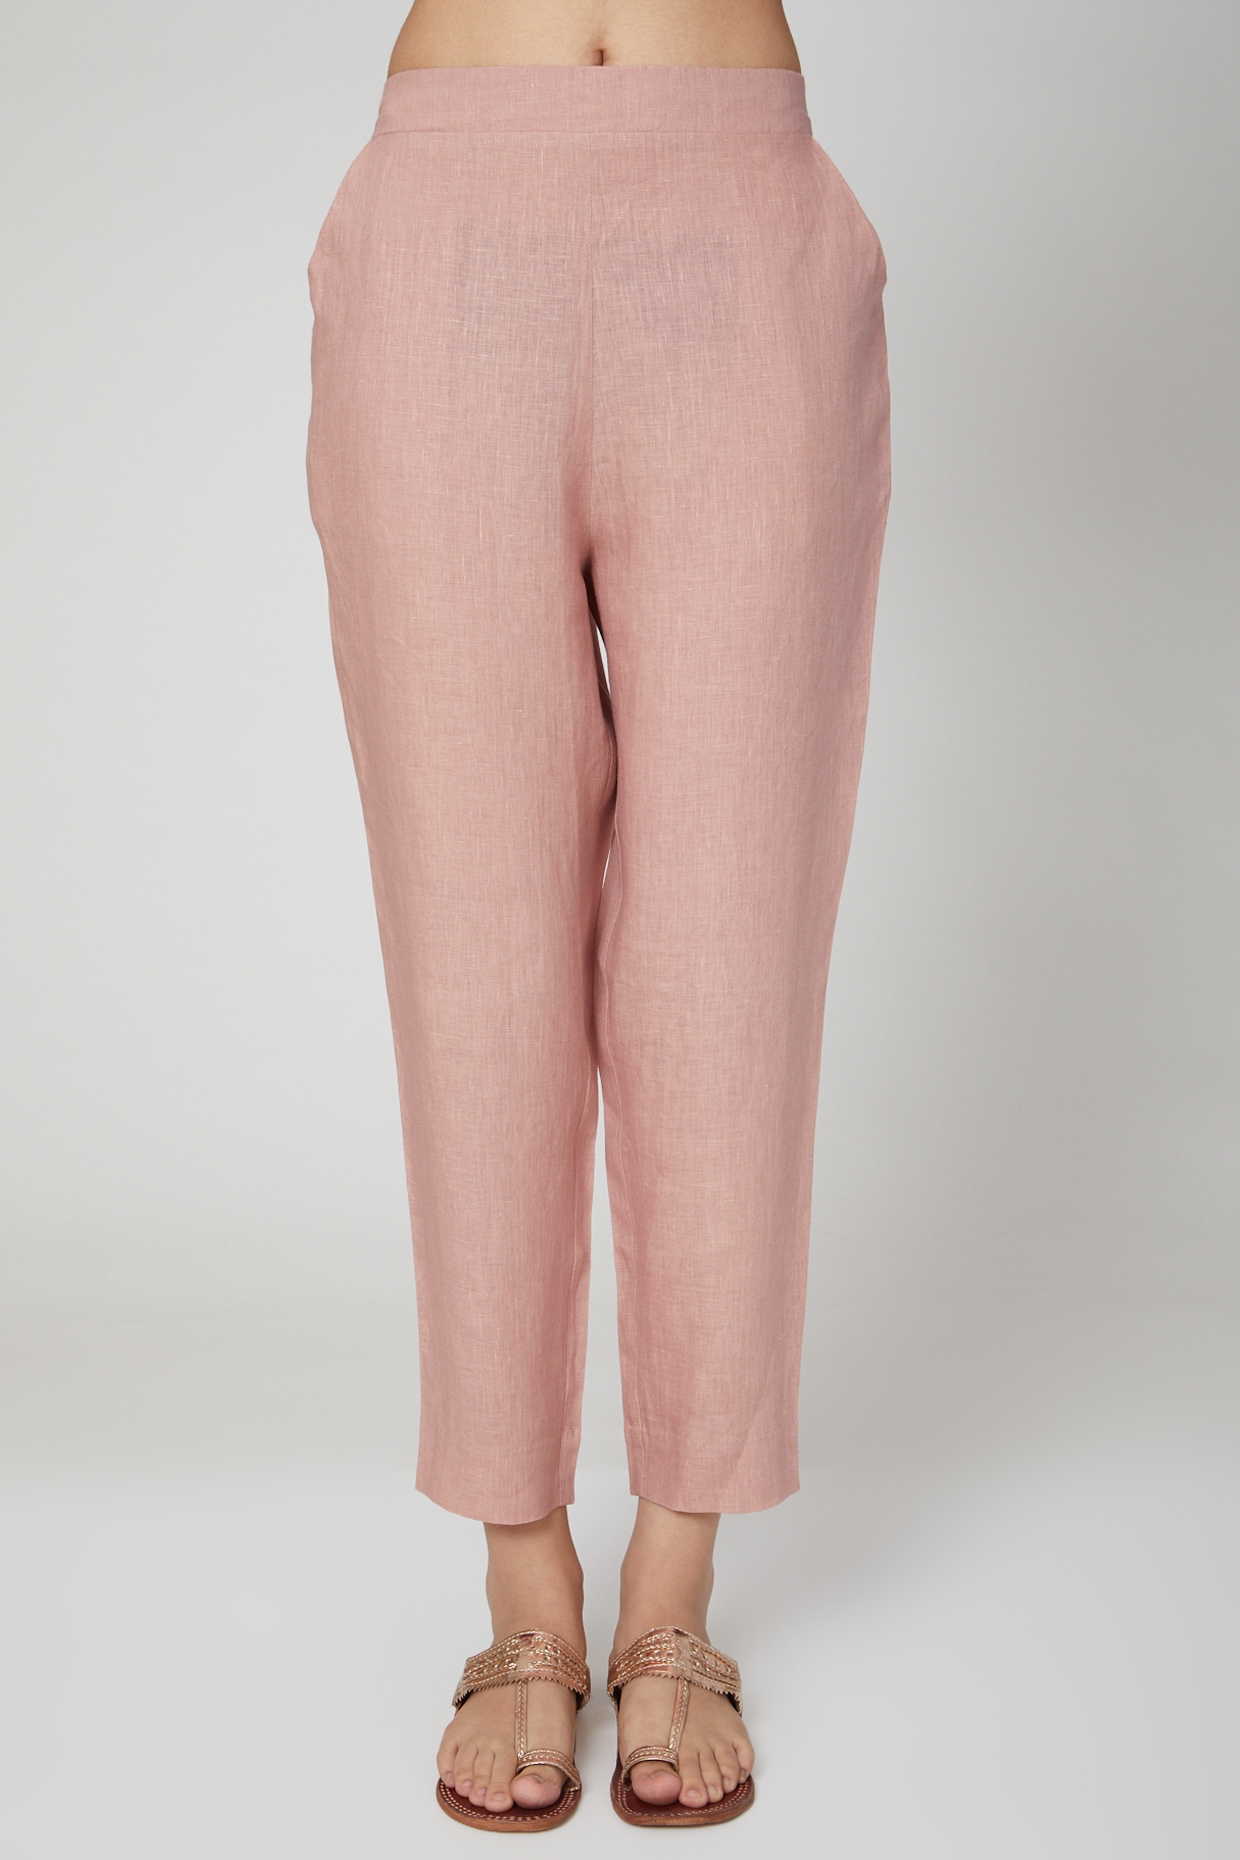 Blush Pink Shattered Glass Holographic Leggings Pants– Peridot Clothing